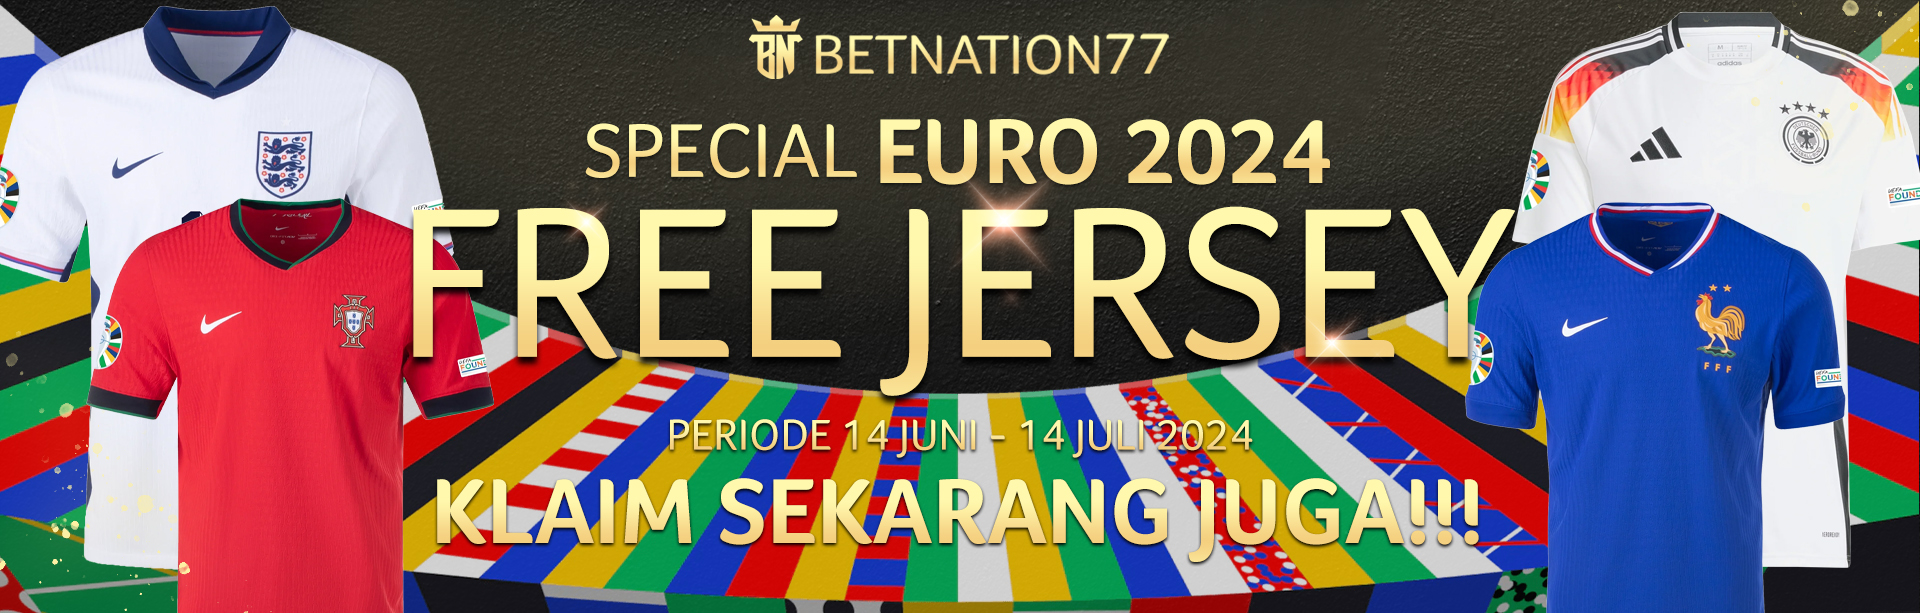 SPECIAL EURO 2024 FREE JERSEY PERIODE 14 JUNI - 14 JULI 2024